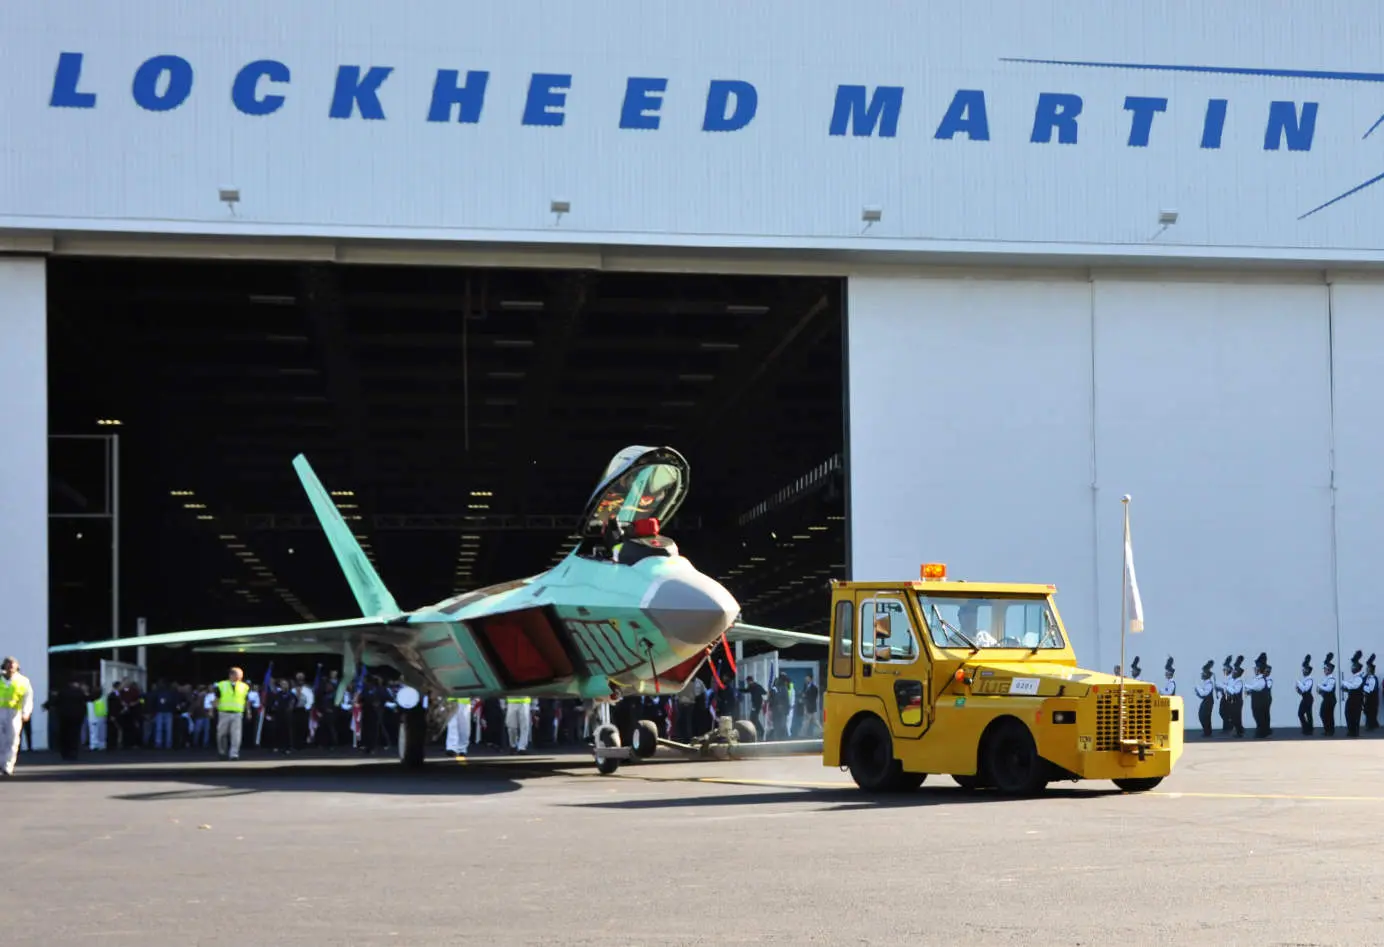 Lockheed Martin made the F-22 Raptor